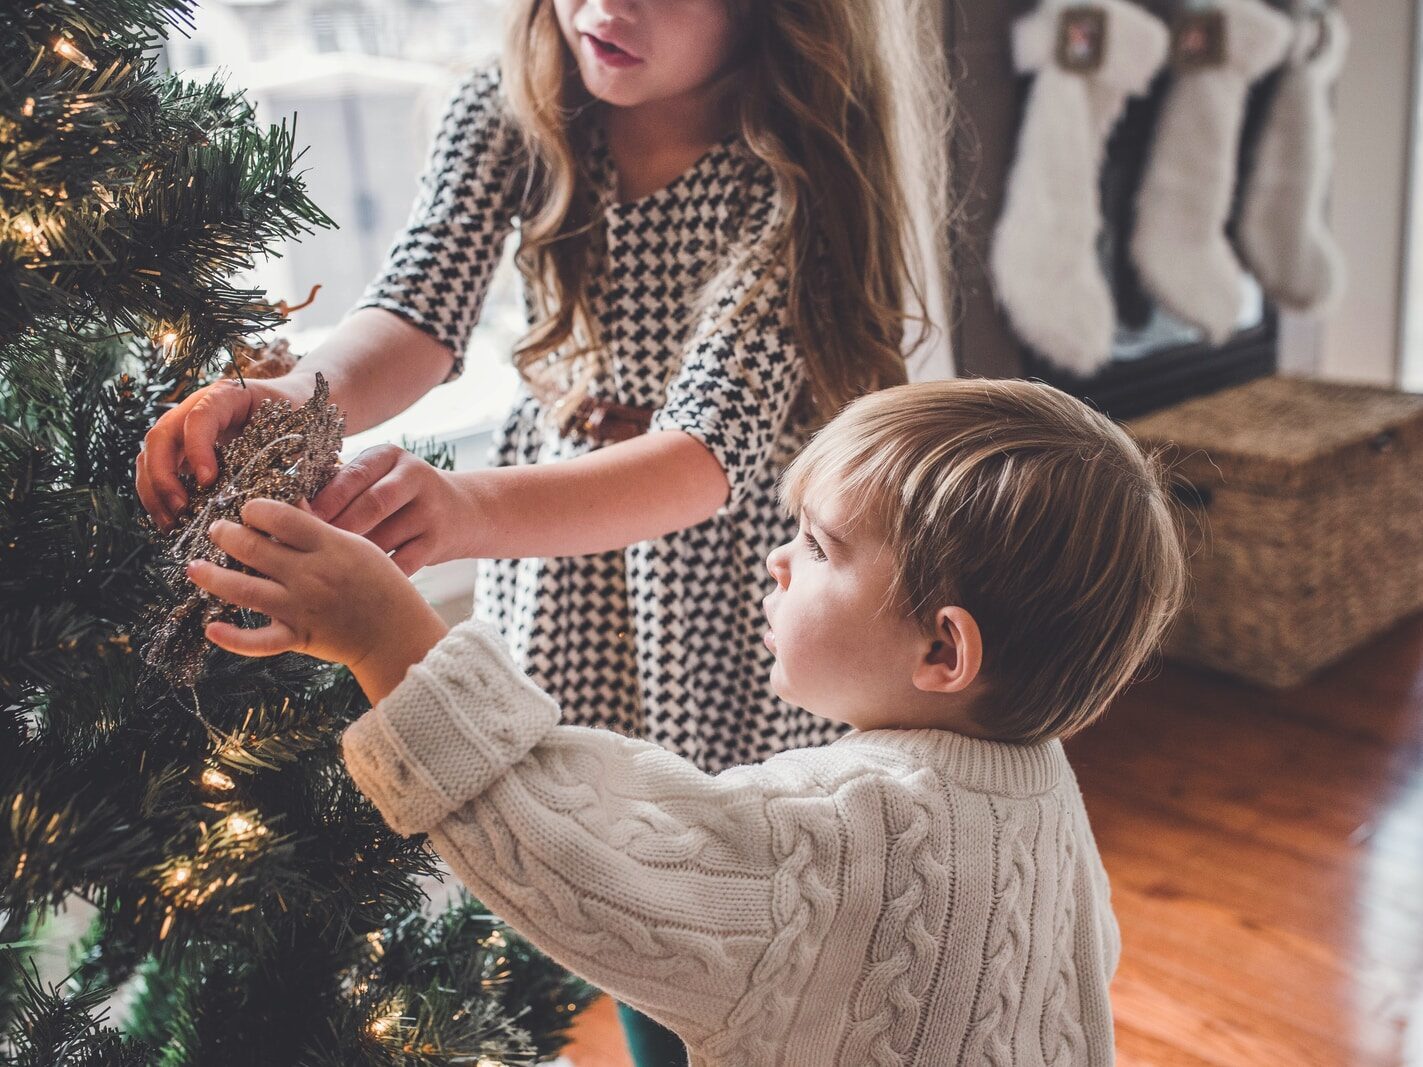 boy and girl decorating Christmas tree inside room